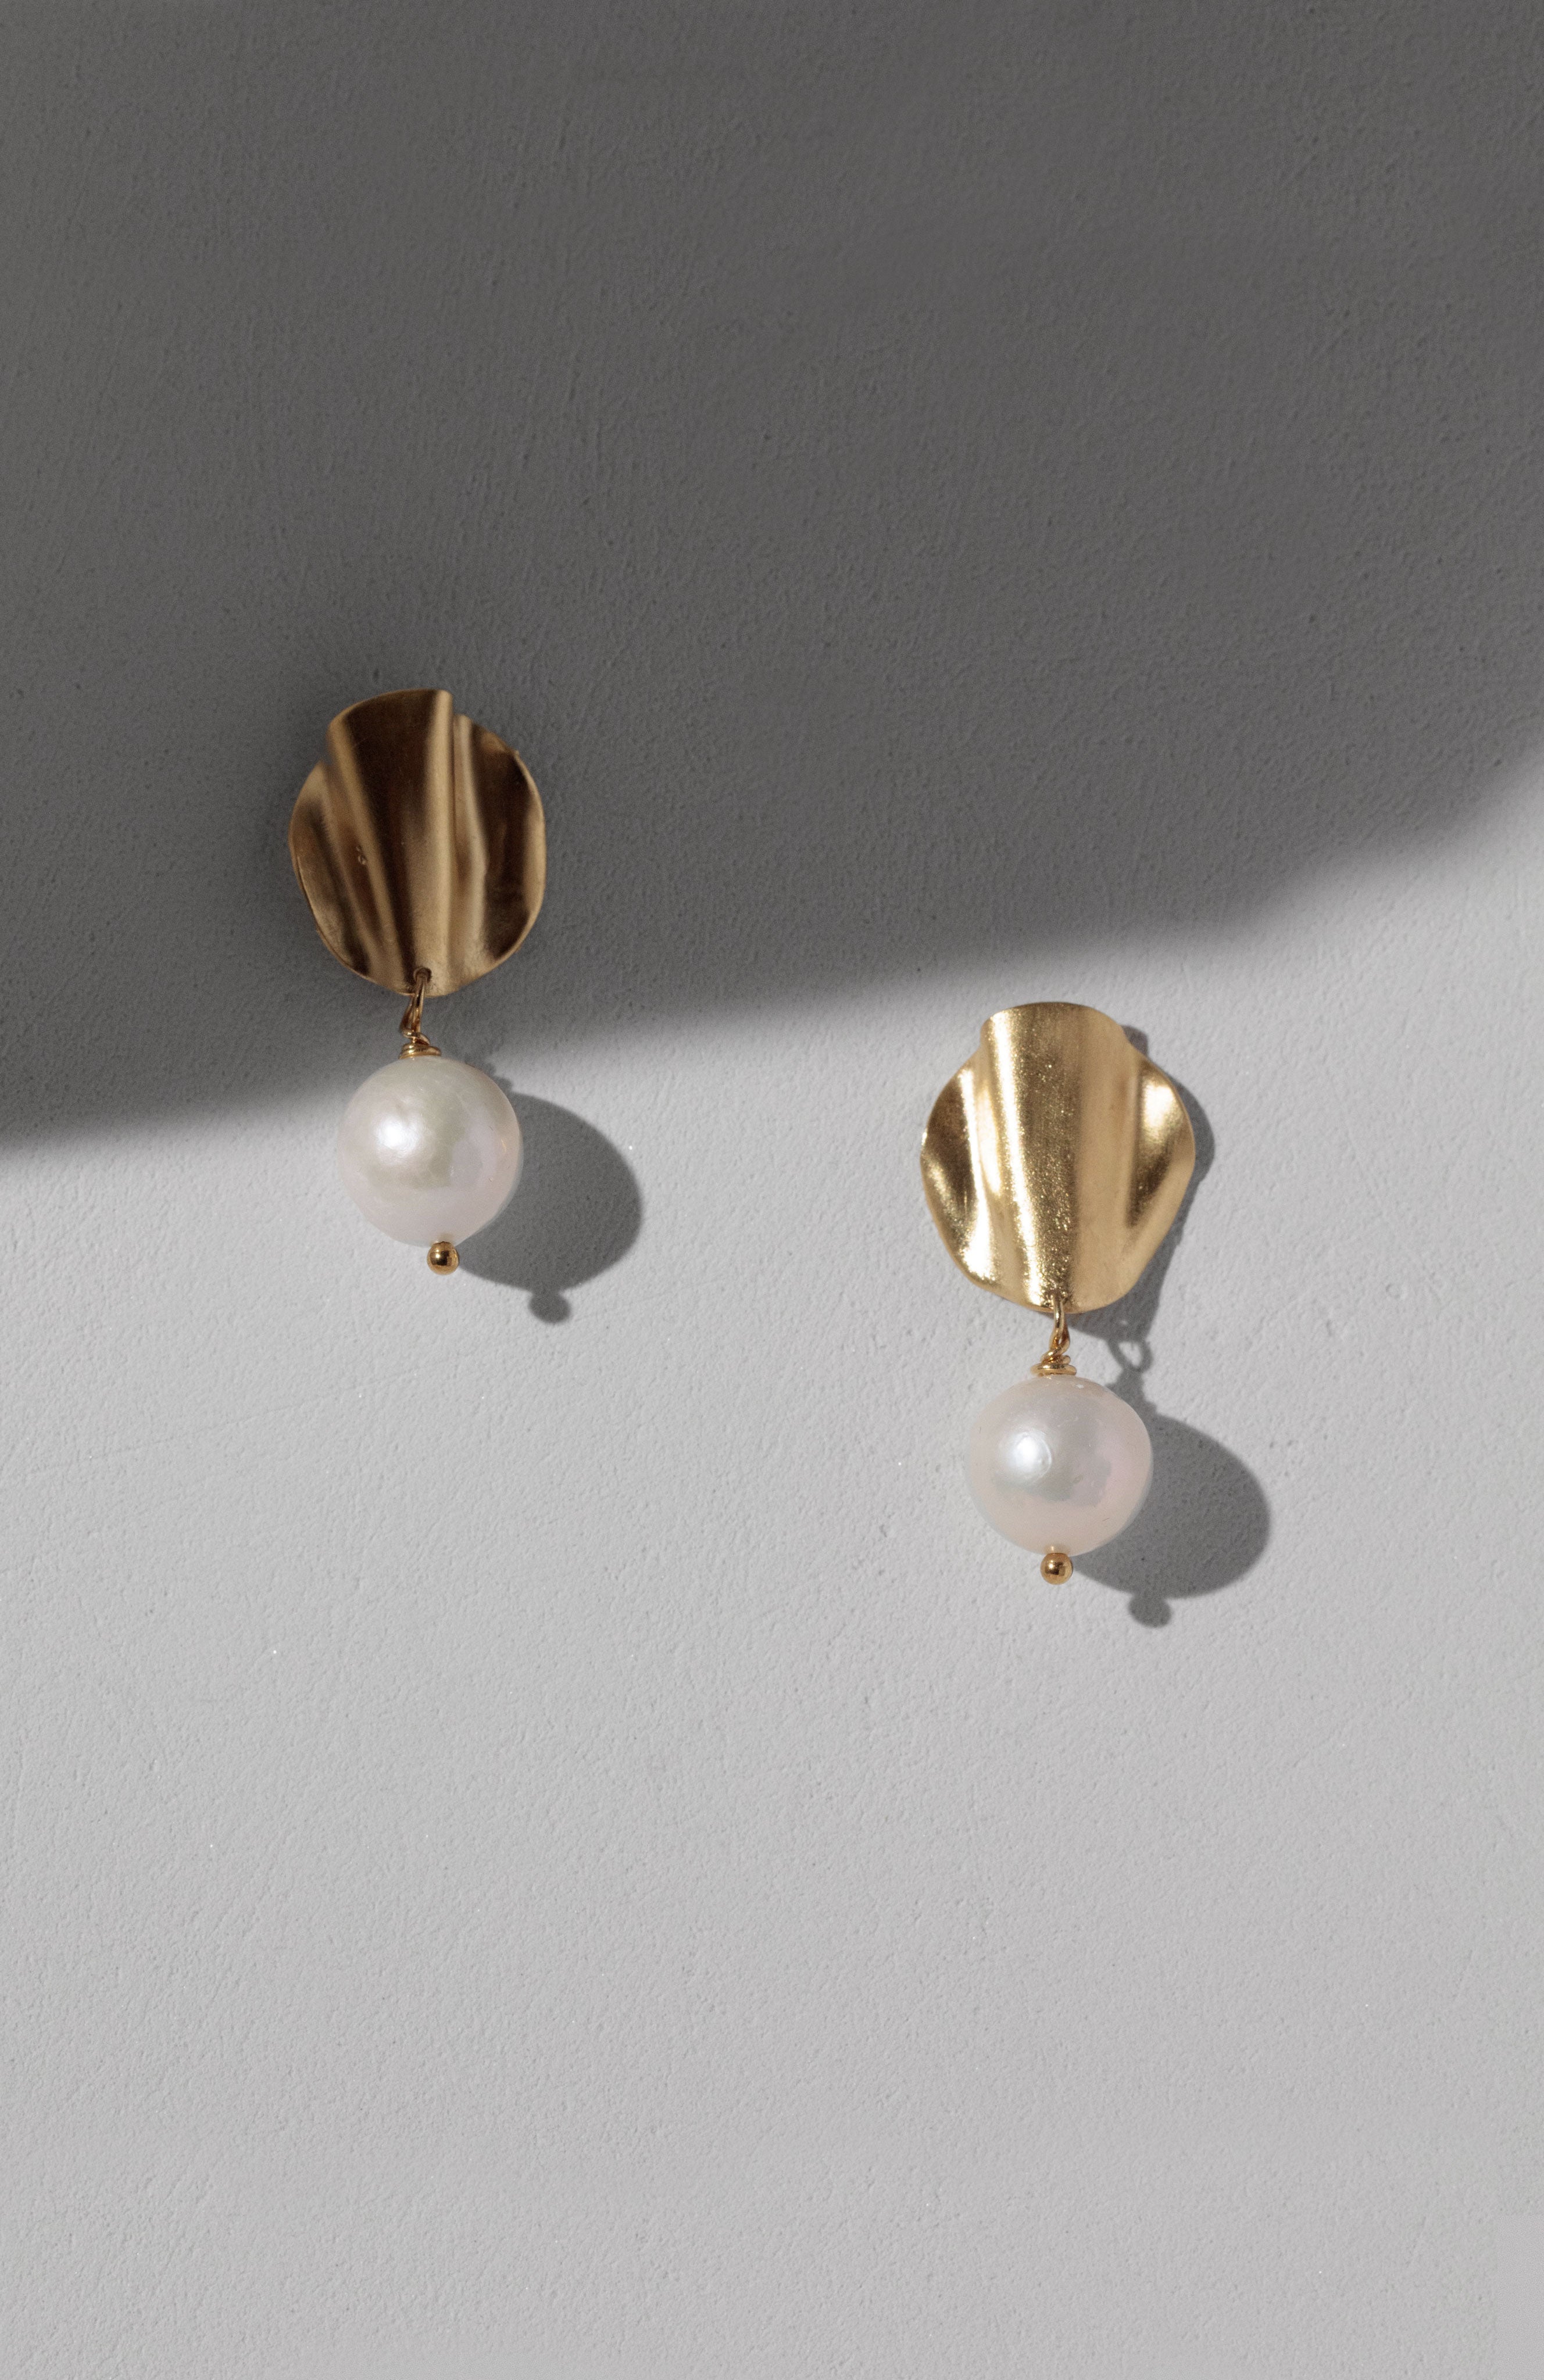 Draped Pearl earring - single or pair